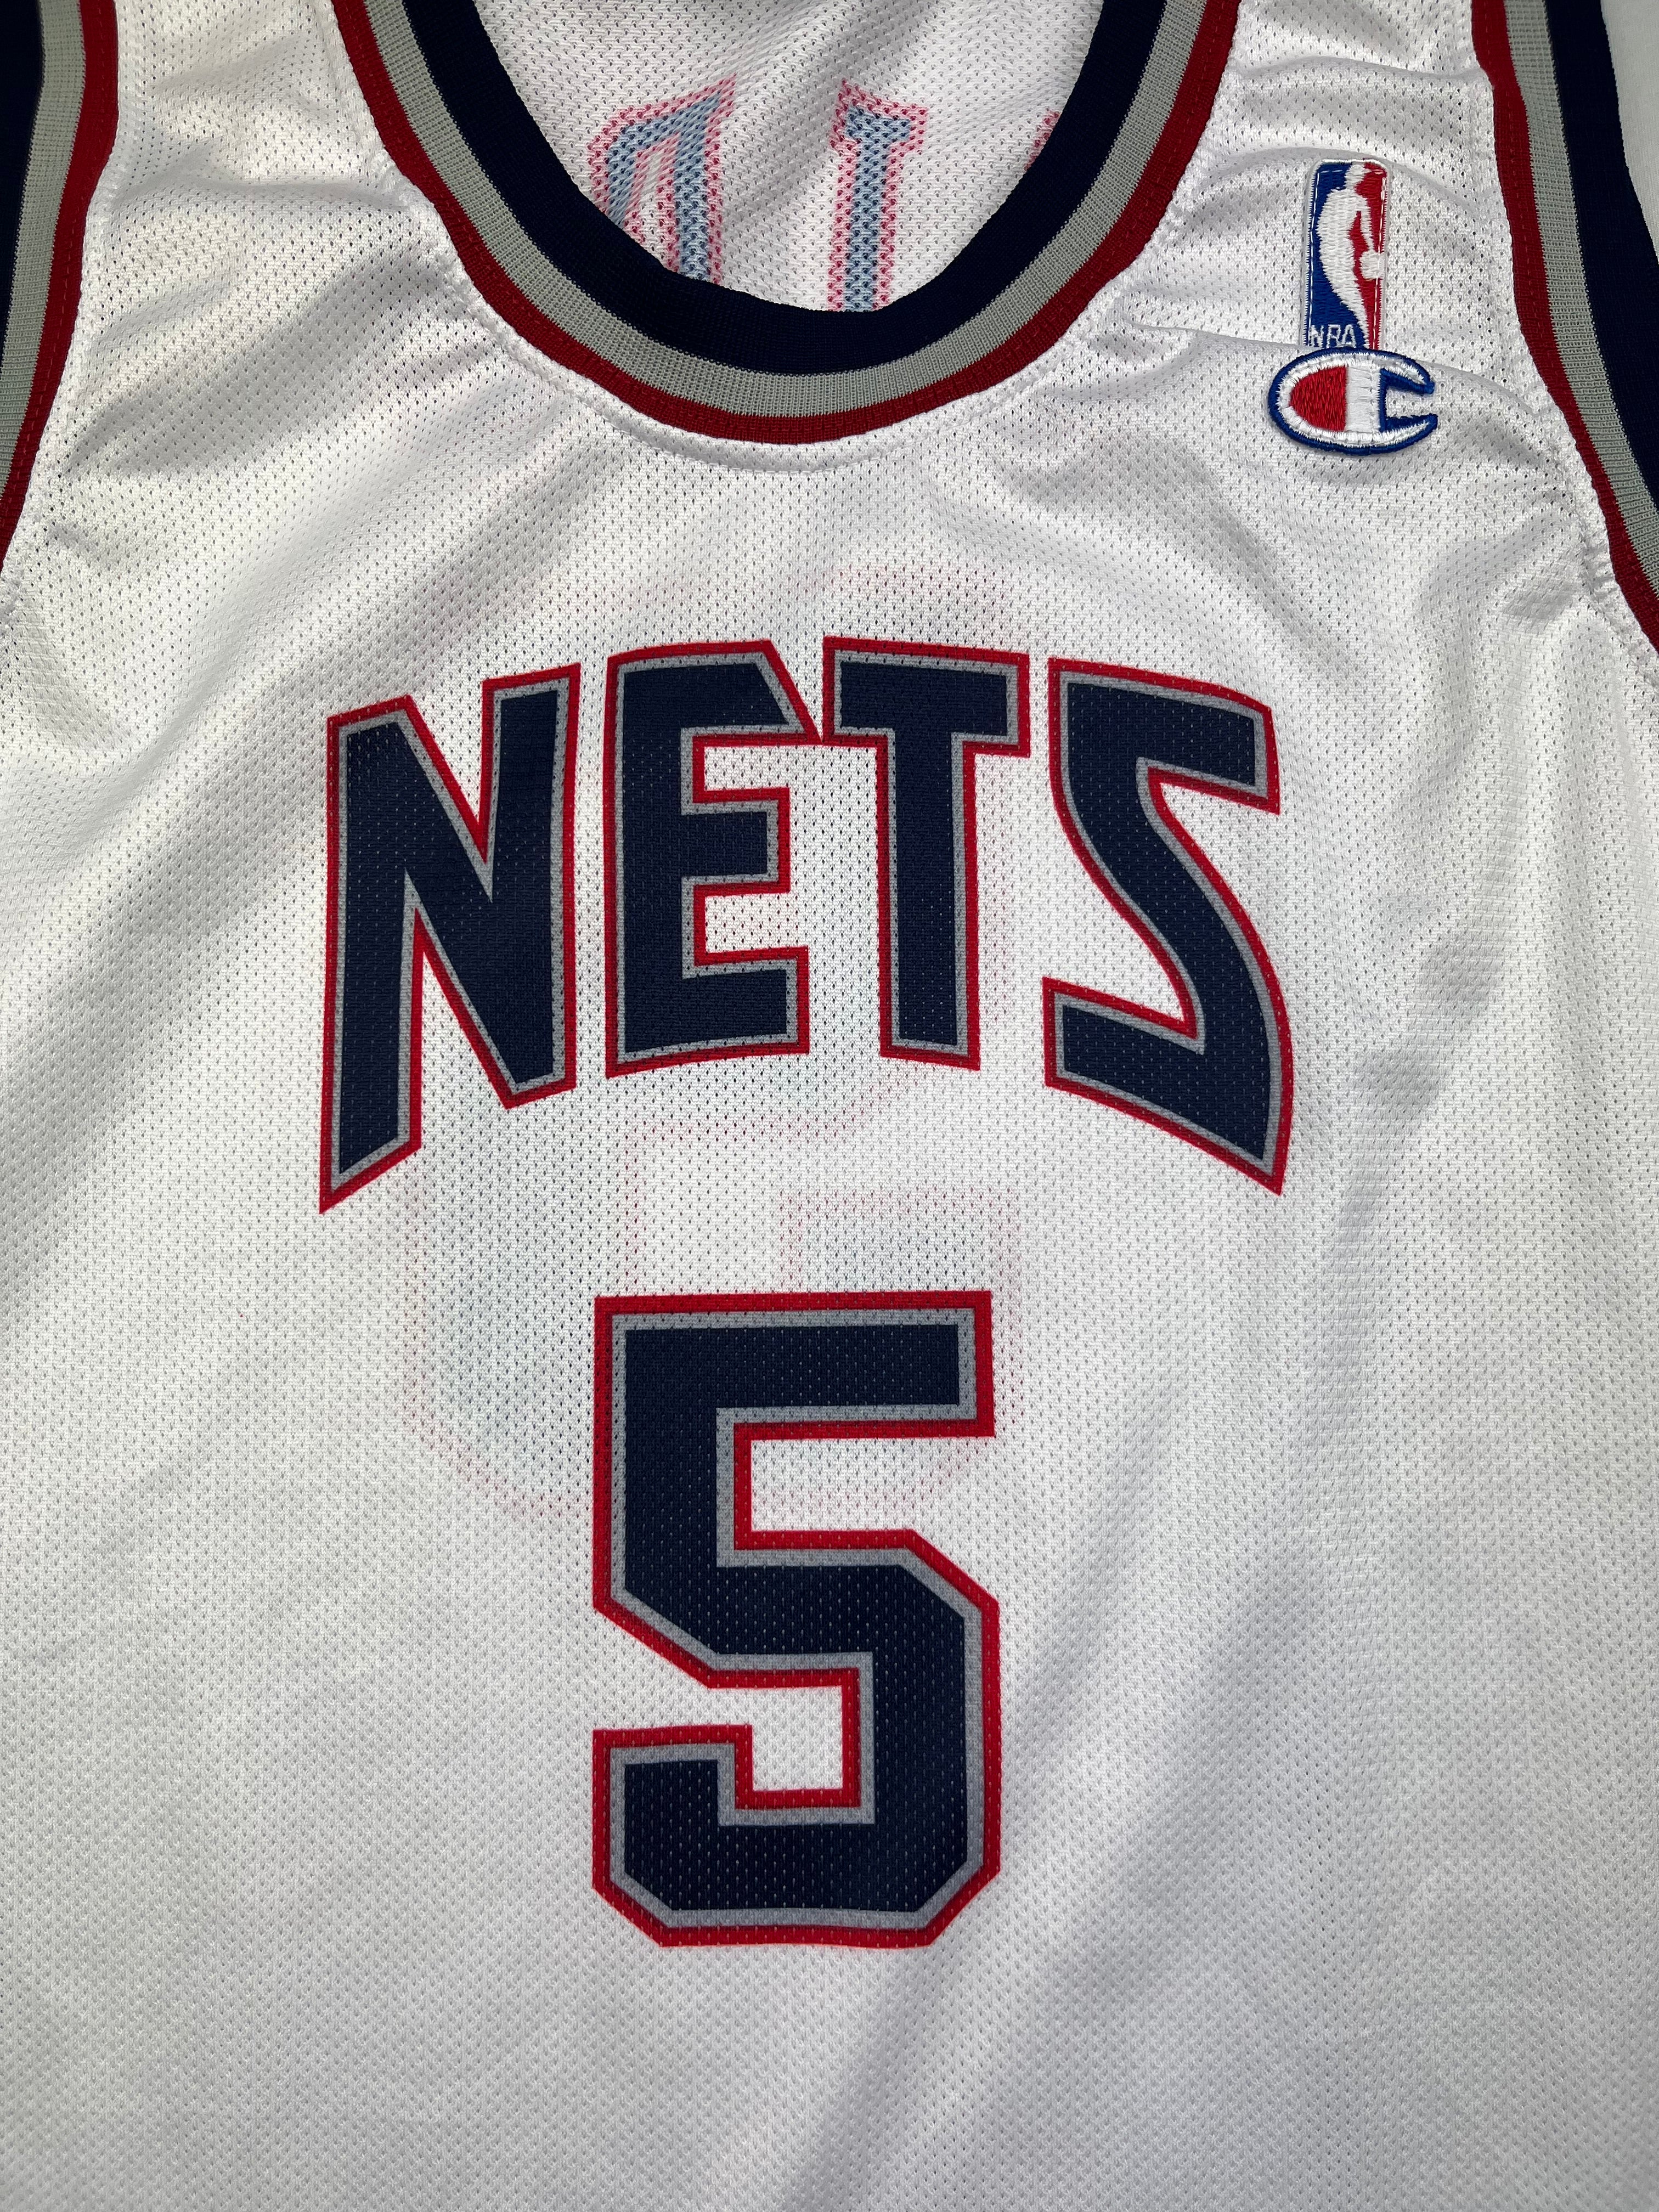 1997/02 New Jersey Nets Champion Home Jersey Kidd #5 (L) 9/10